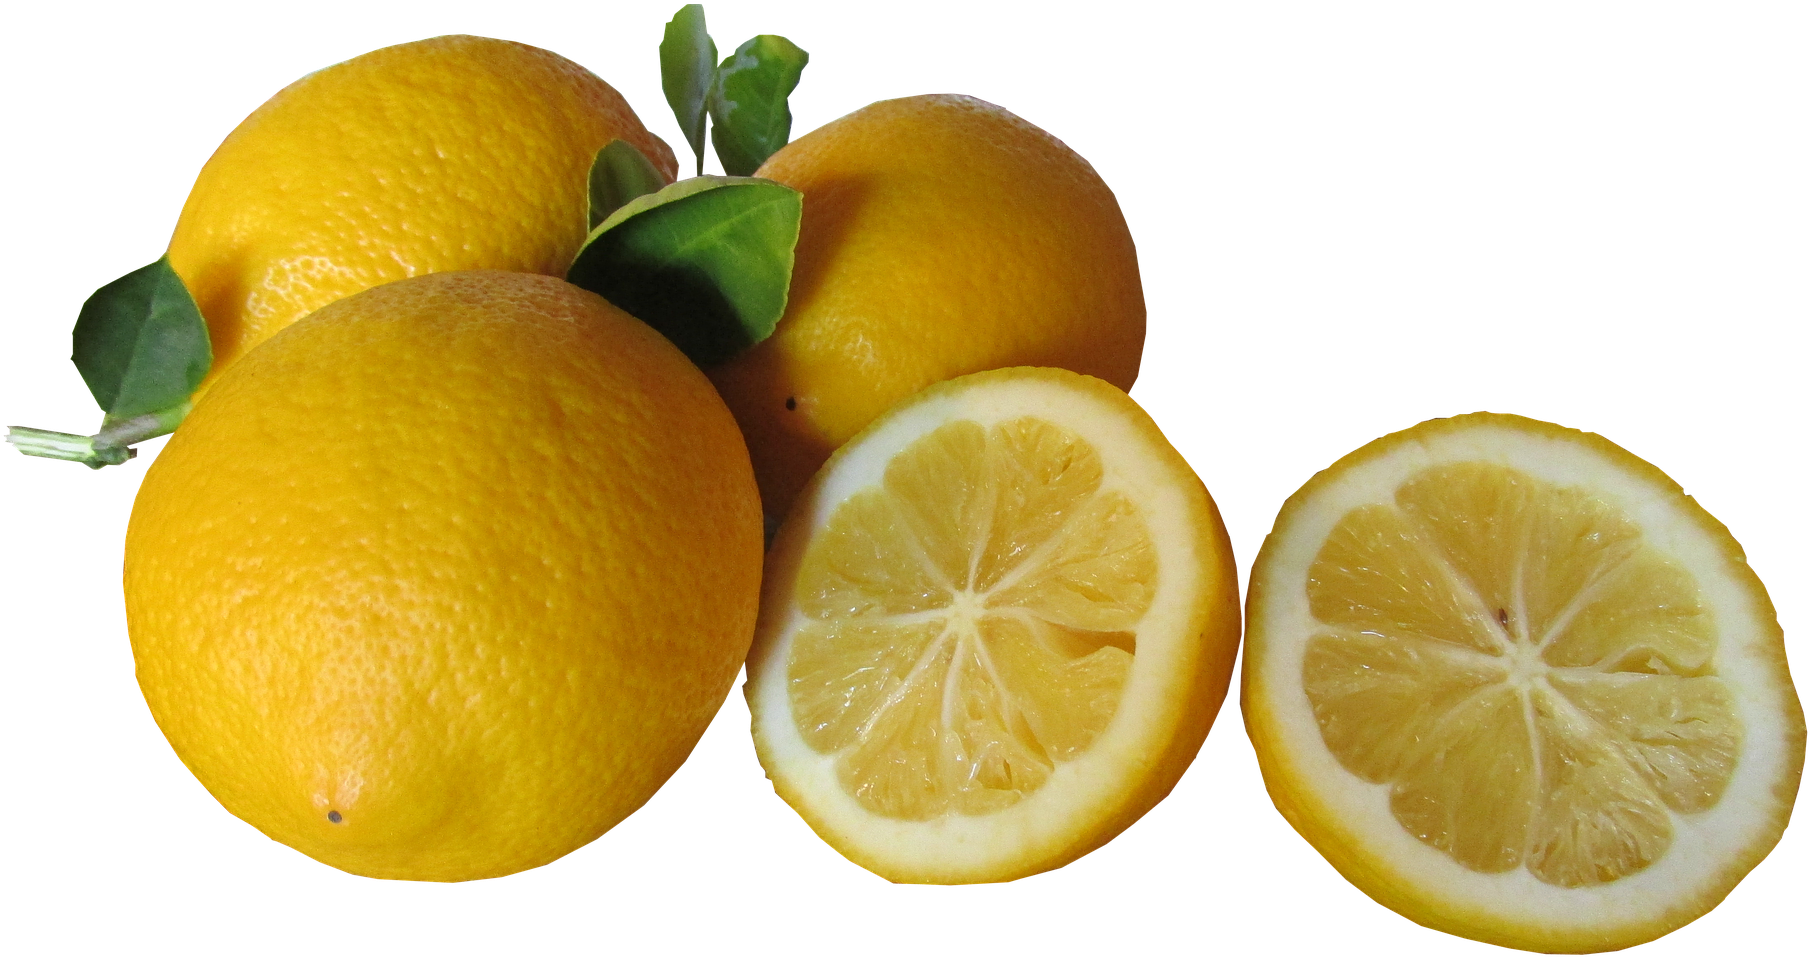 Can A Lemon A Day Keeps Doctors Away - Lemons Cut Out (1920x1080)